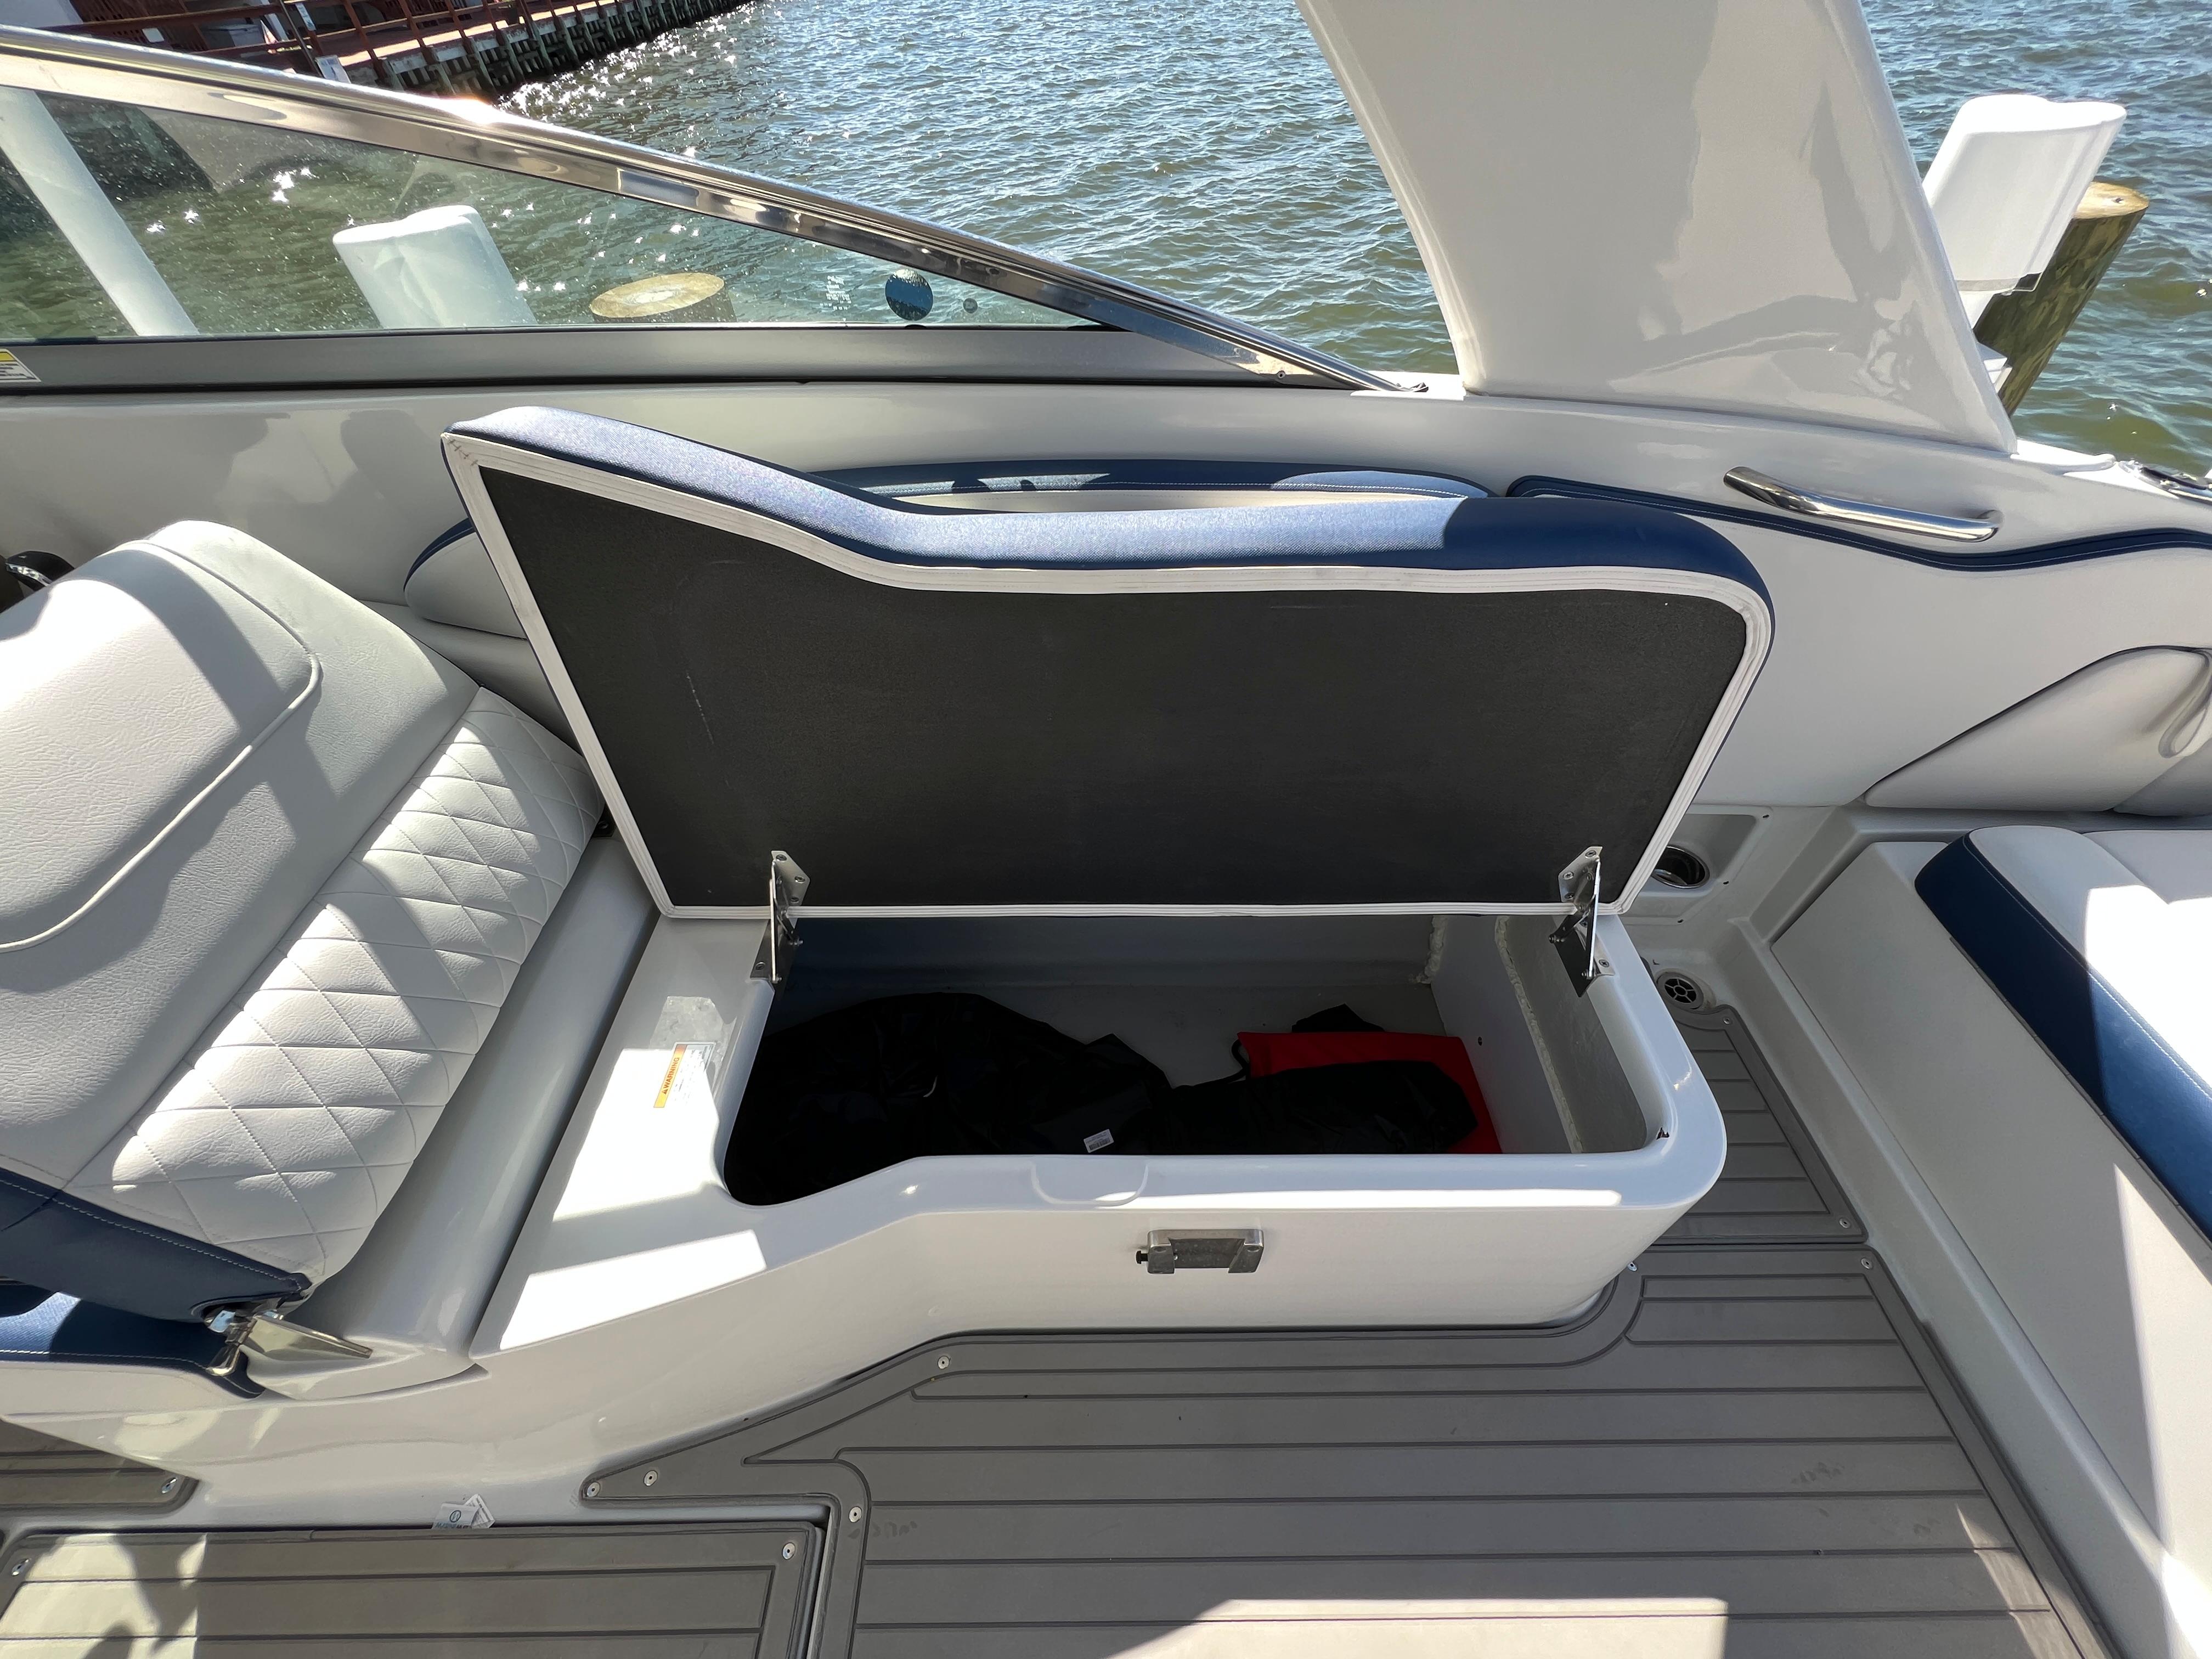 2022 Crownline E305 XS Port Cockpit Seating Storage